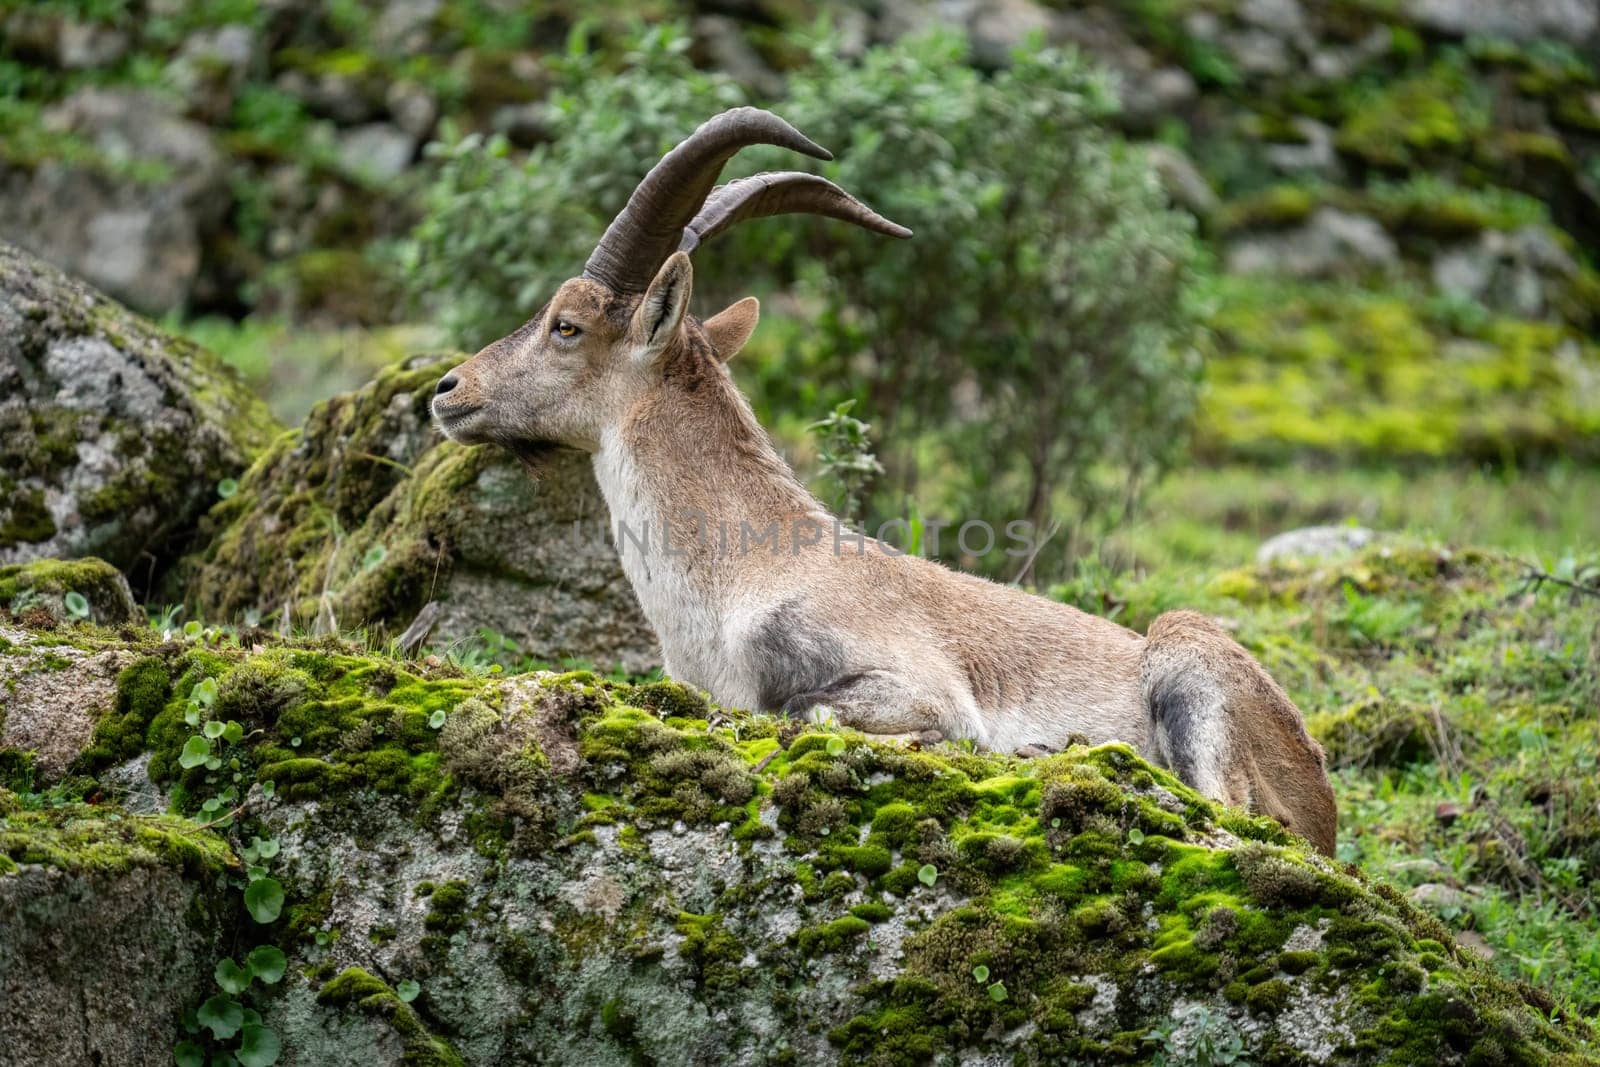 Majestic Mountain Goat Resting on a Lush Green Mossy Rock by FerradalFCG